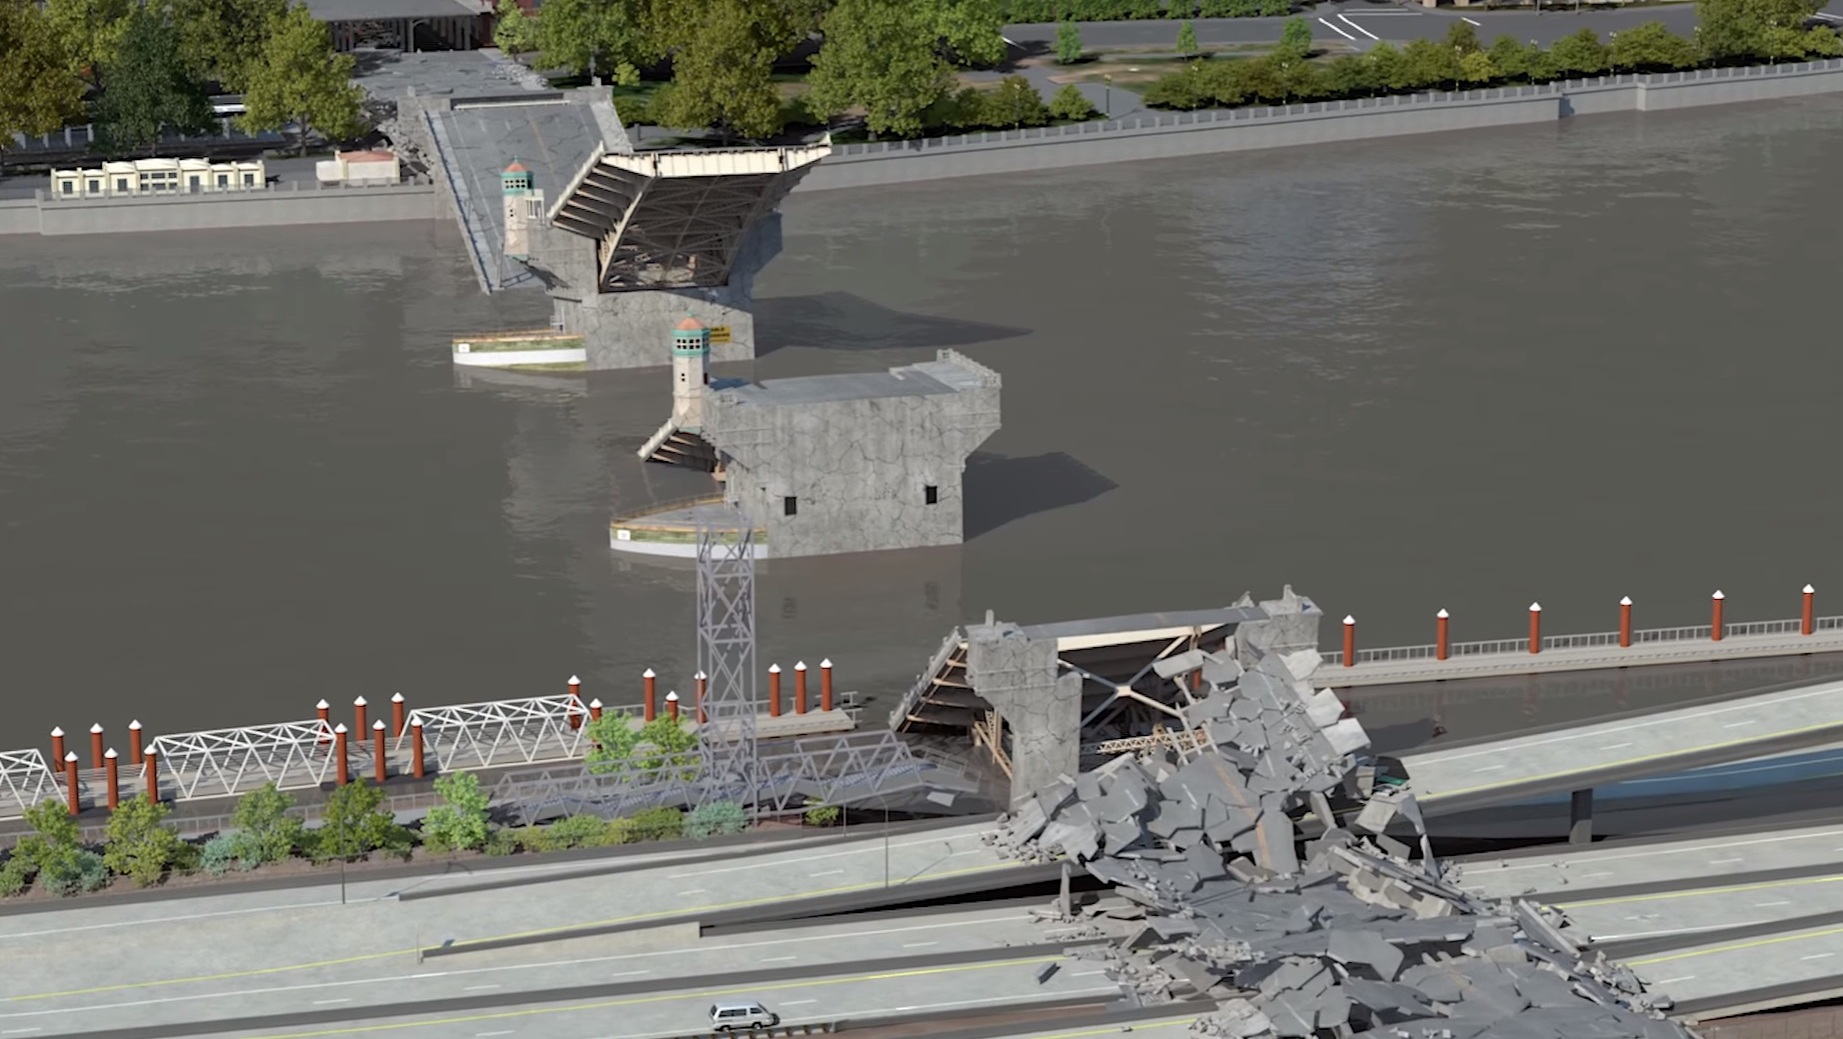 kgw.com | Simulation shows Burnside Bridge collapsing when ‘The Big One' hits1843 x 1039